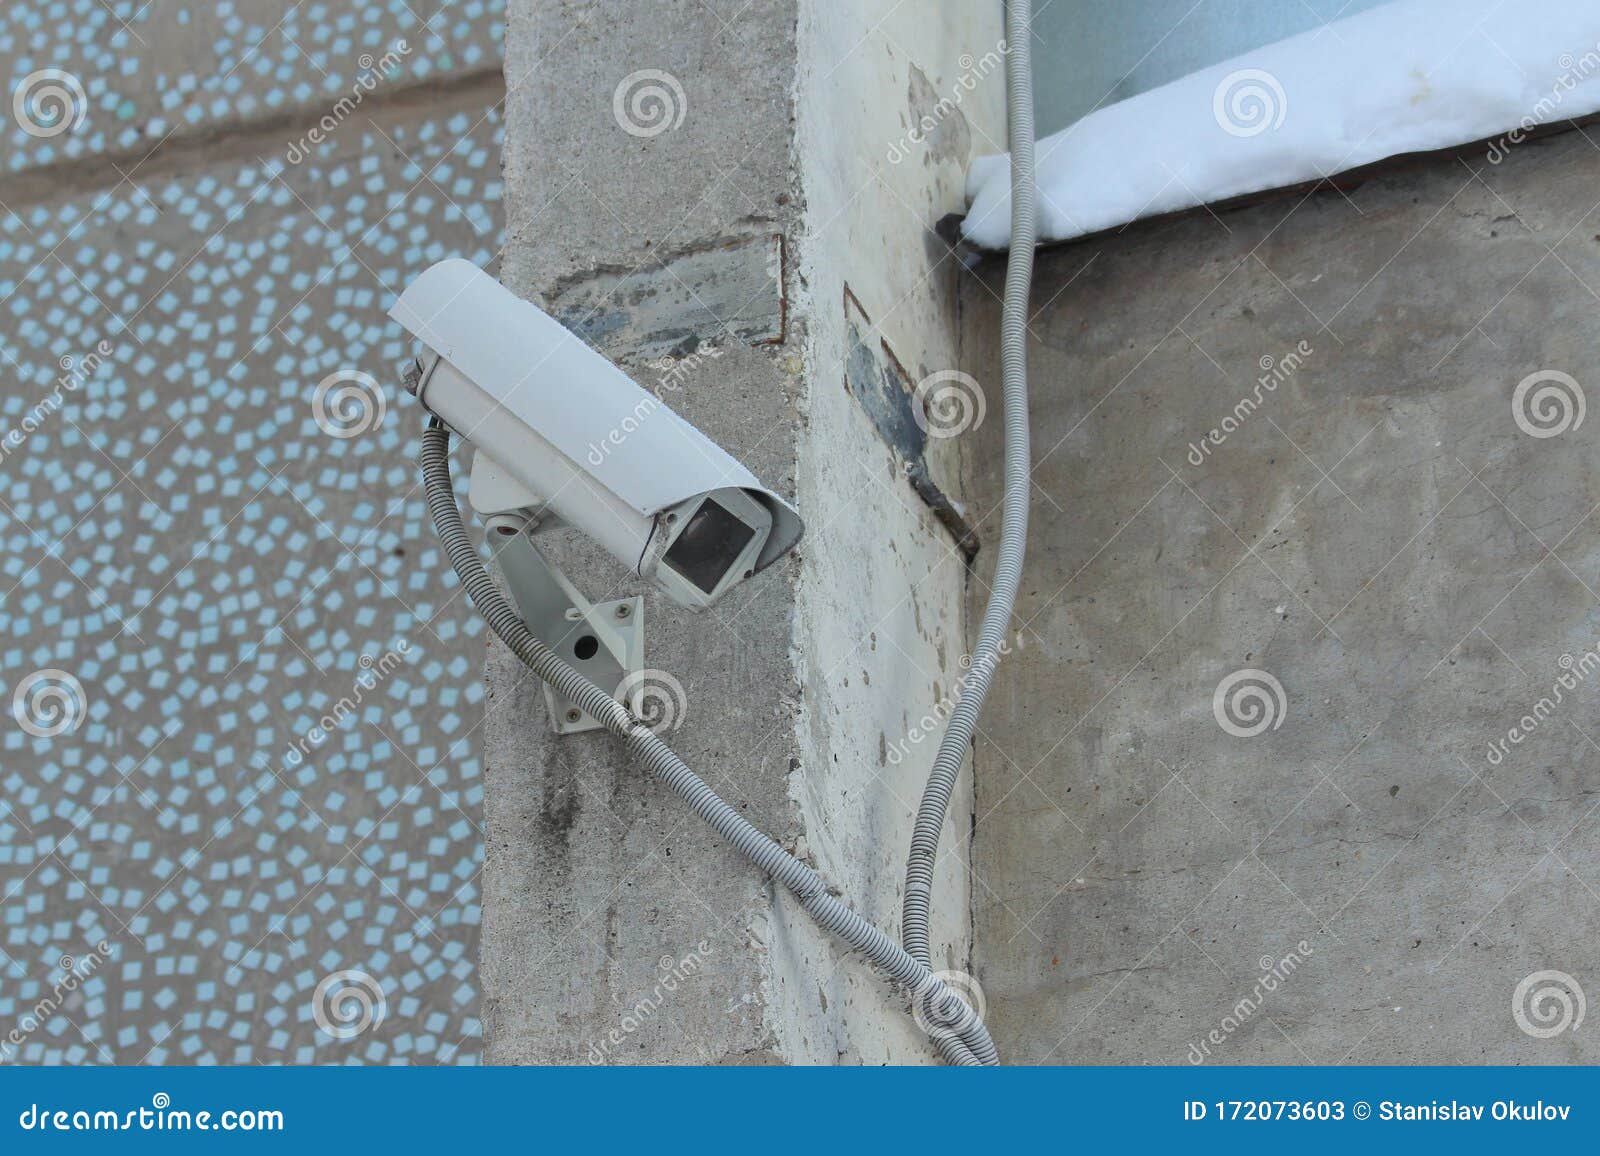 house surveillance camera